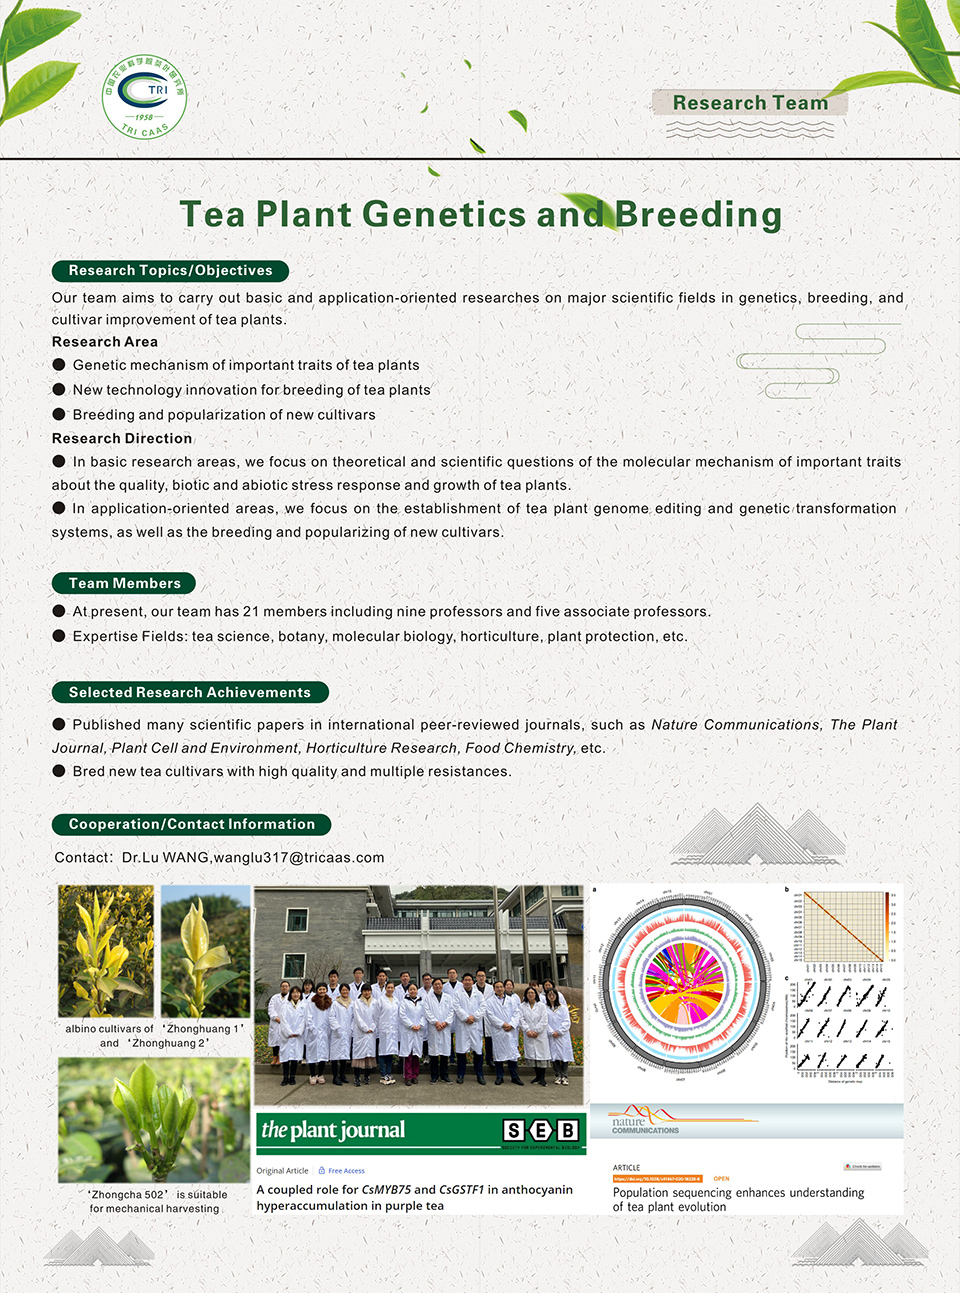 2-Tea Plant Genetics and Breeding.jpg